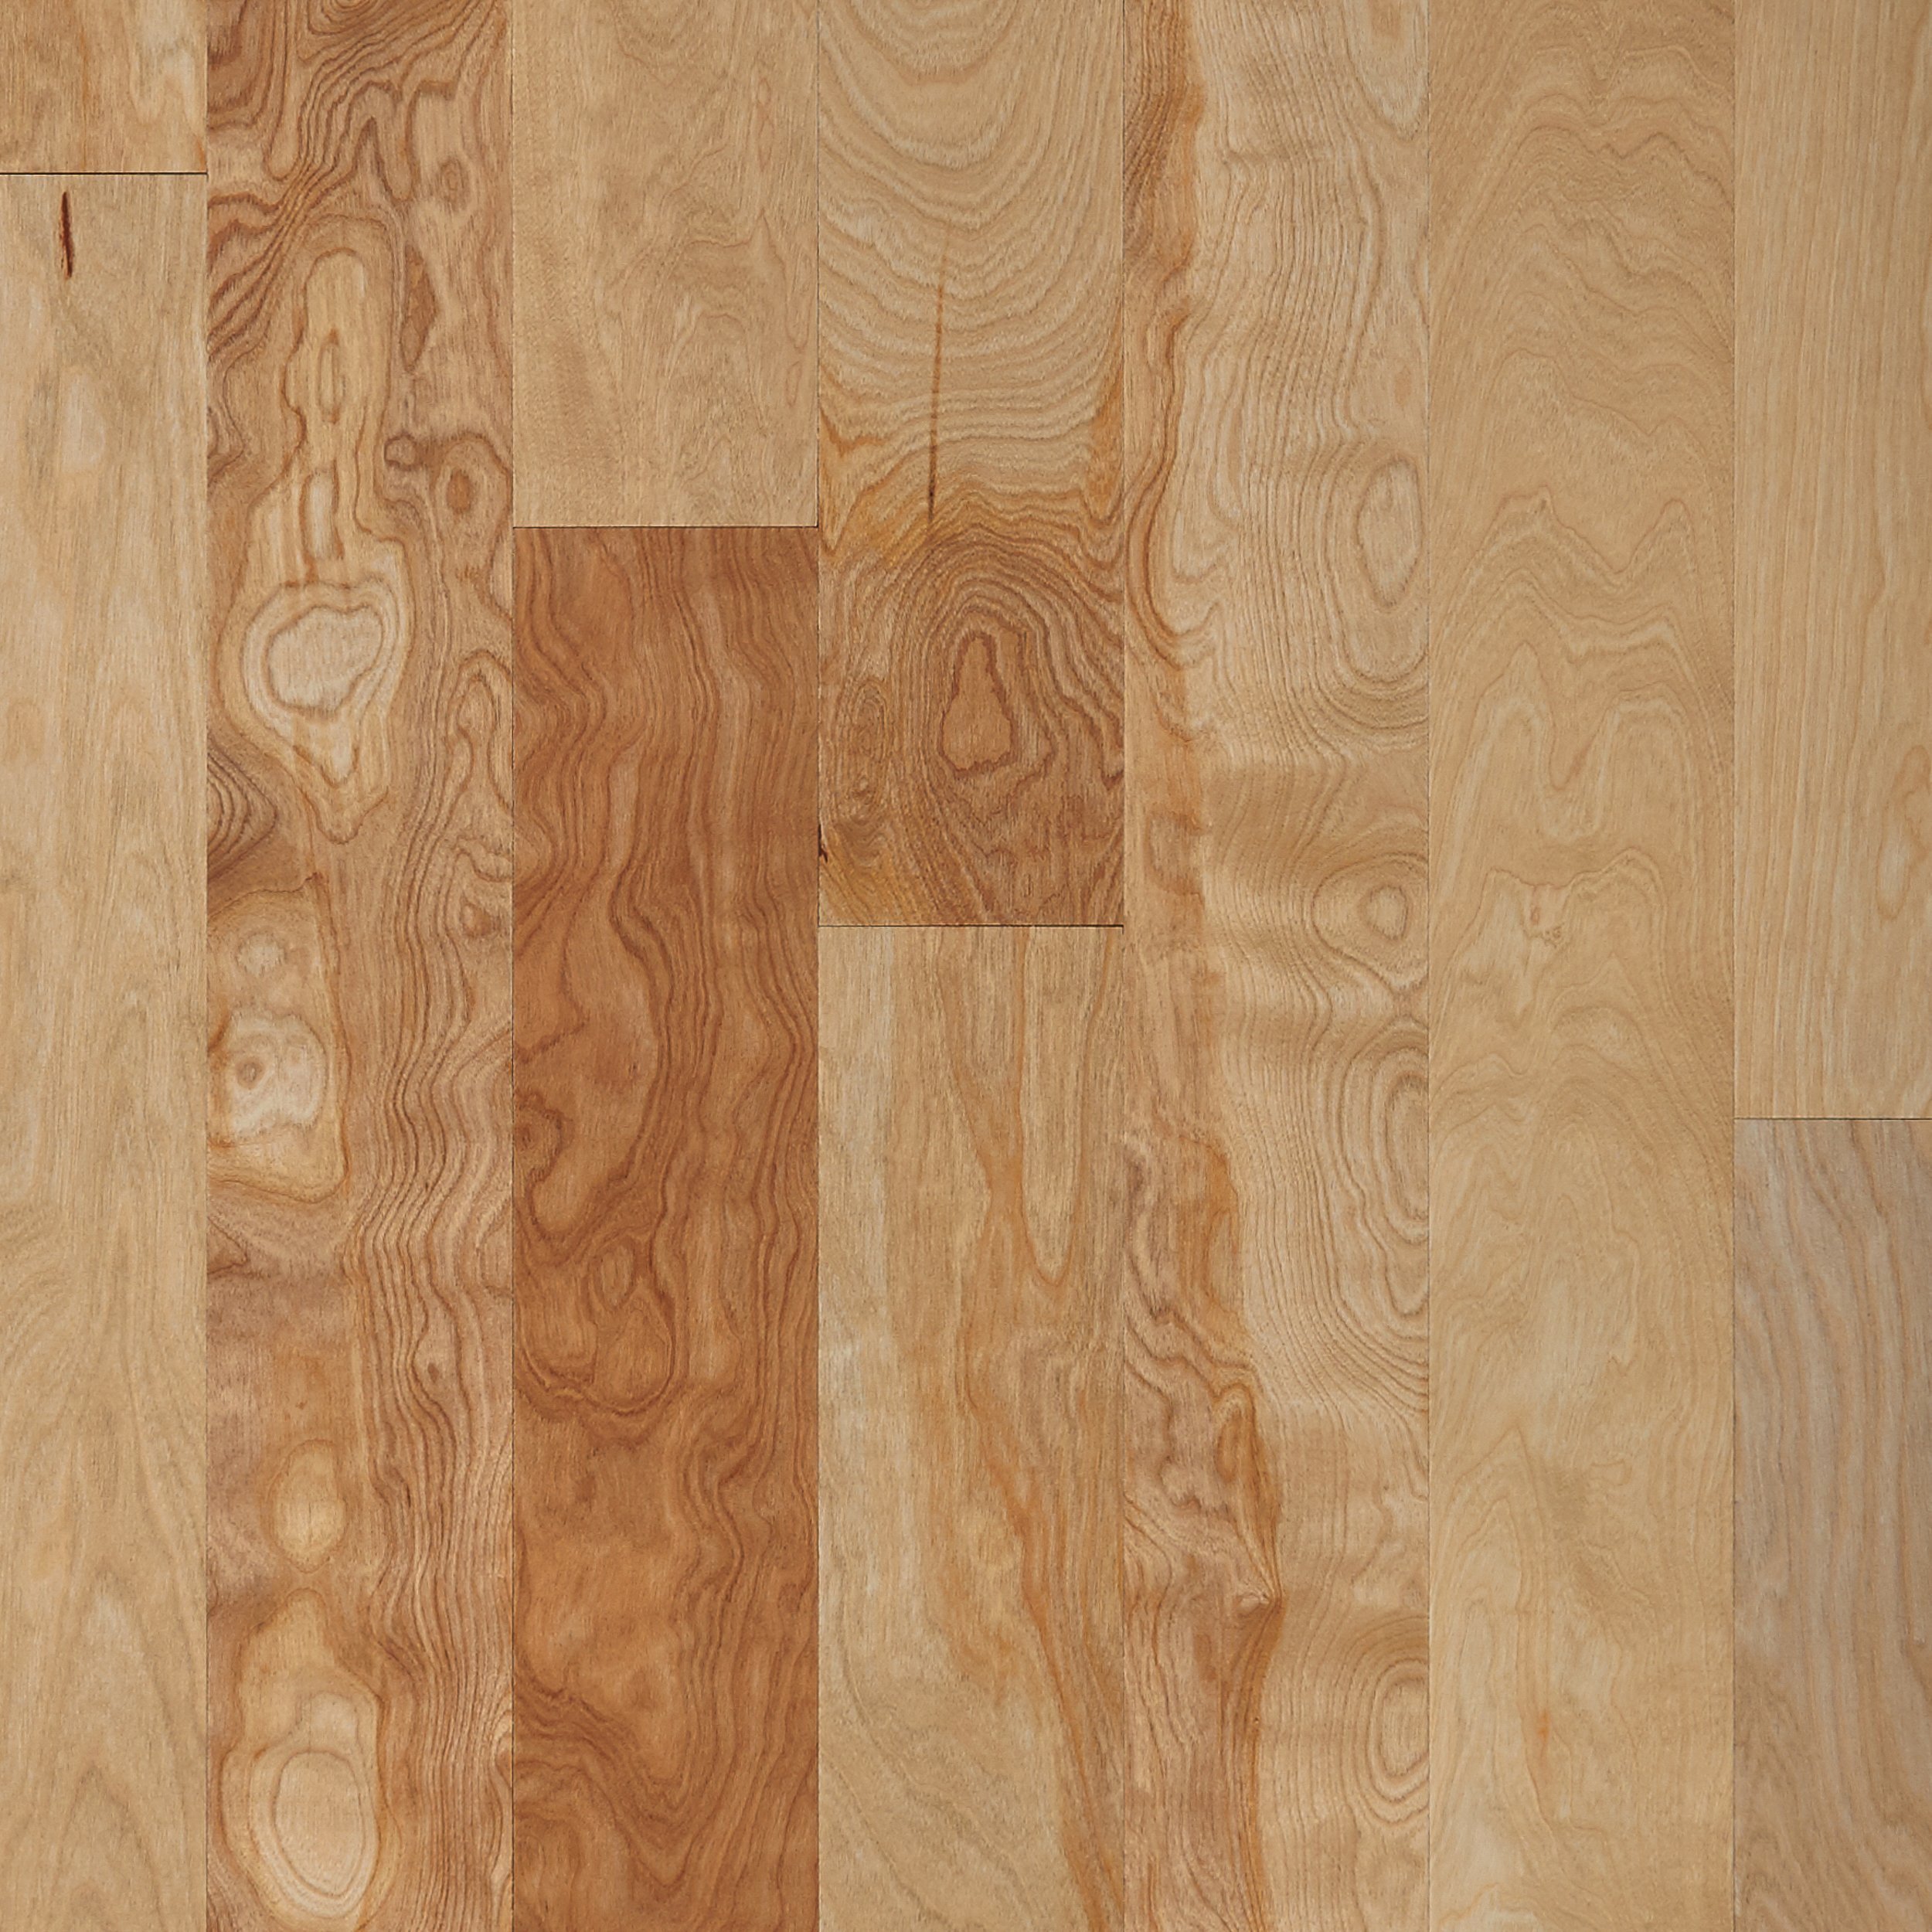 Floor and Decor Engineered Hardwood Inspirational Engineered Hardwood Flooring